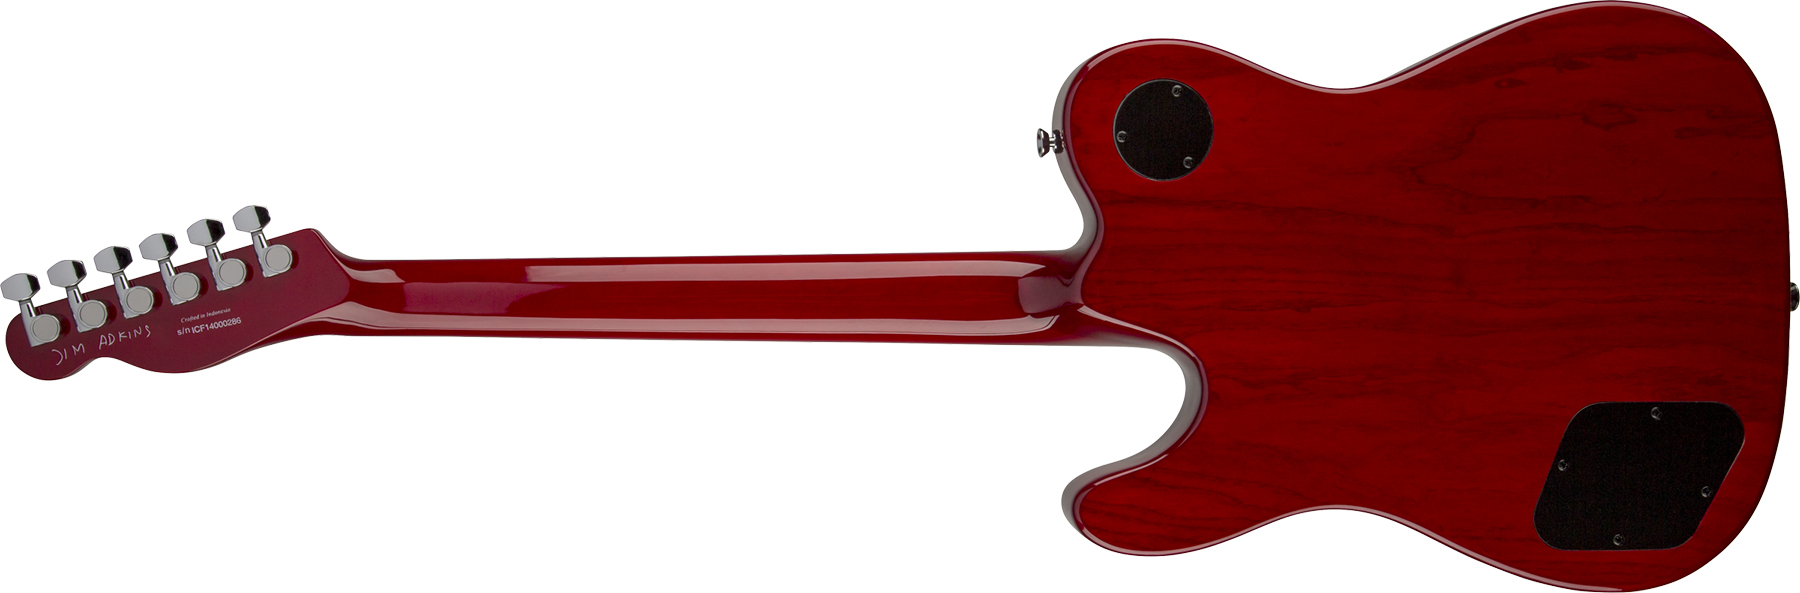 Fender Jim Adkins Tele Ja-90 Mex Signature 2p90 Lau - Crimson Red Transparent - Televorm elektrische gitaar - Variation 1